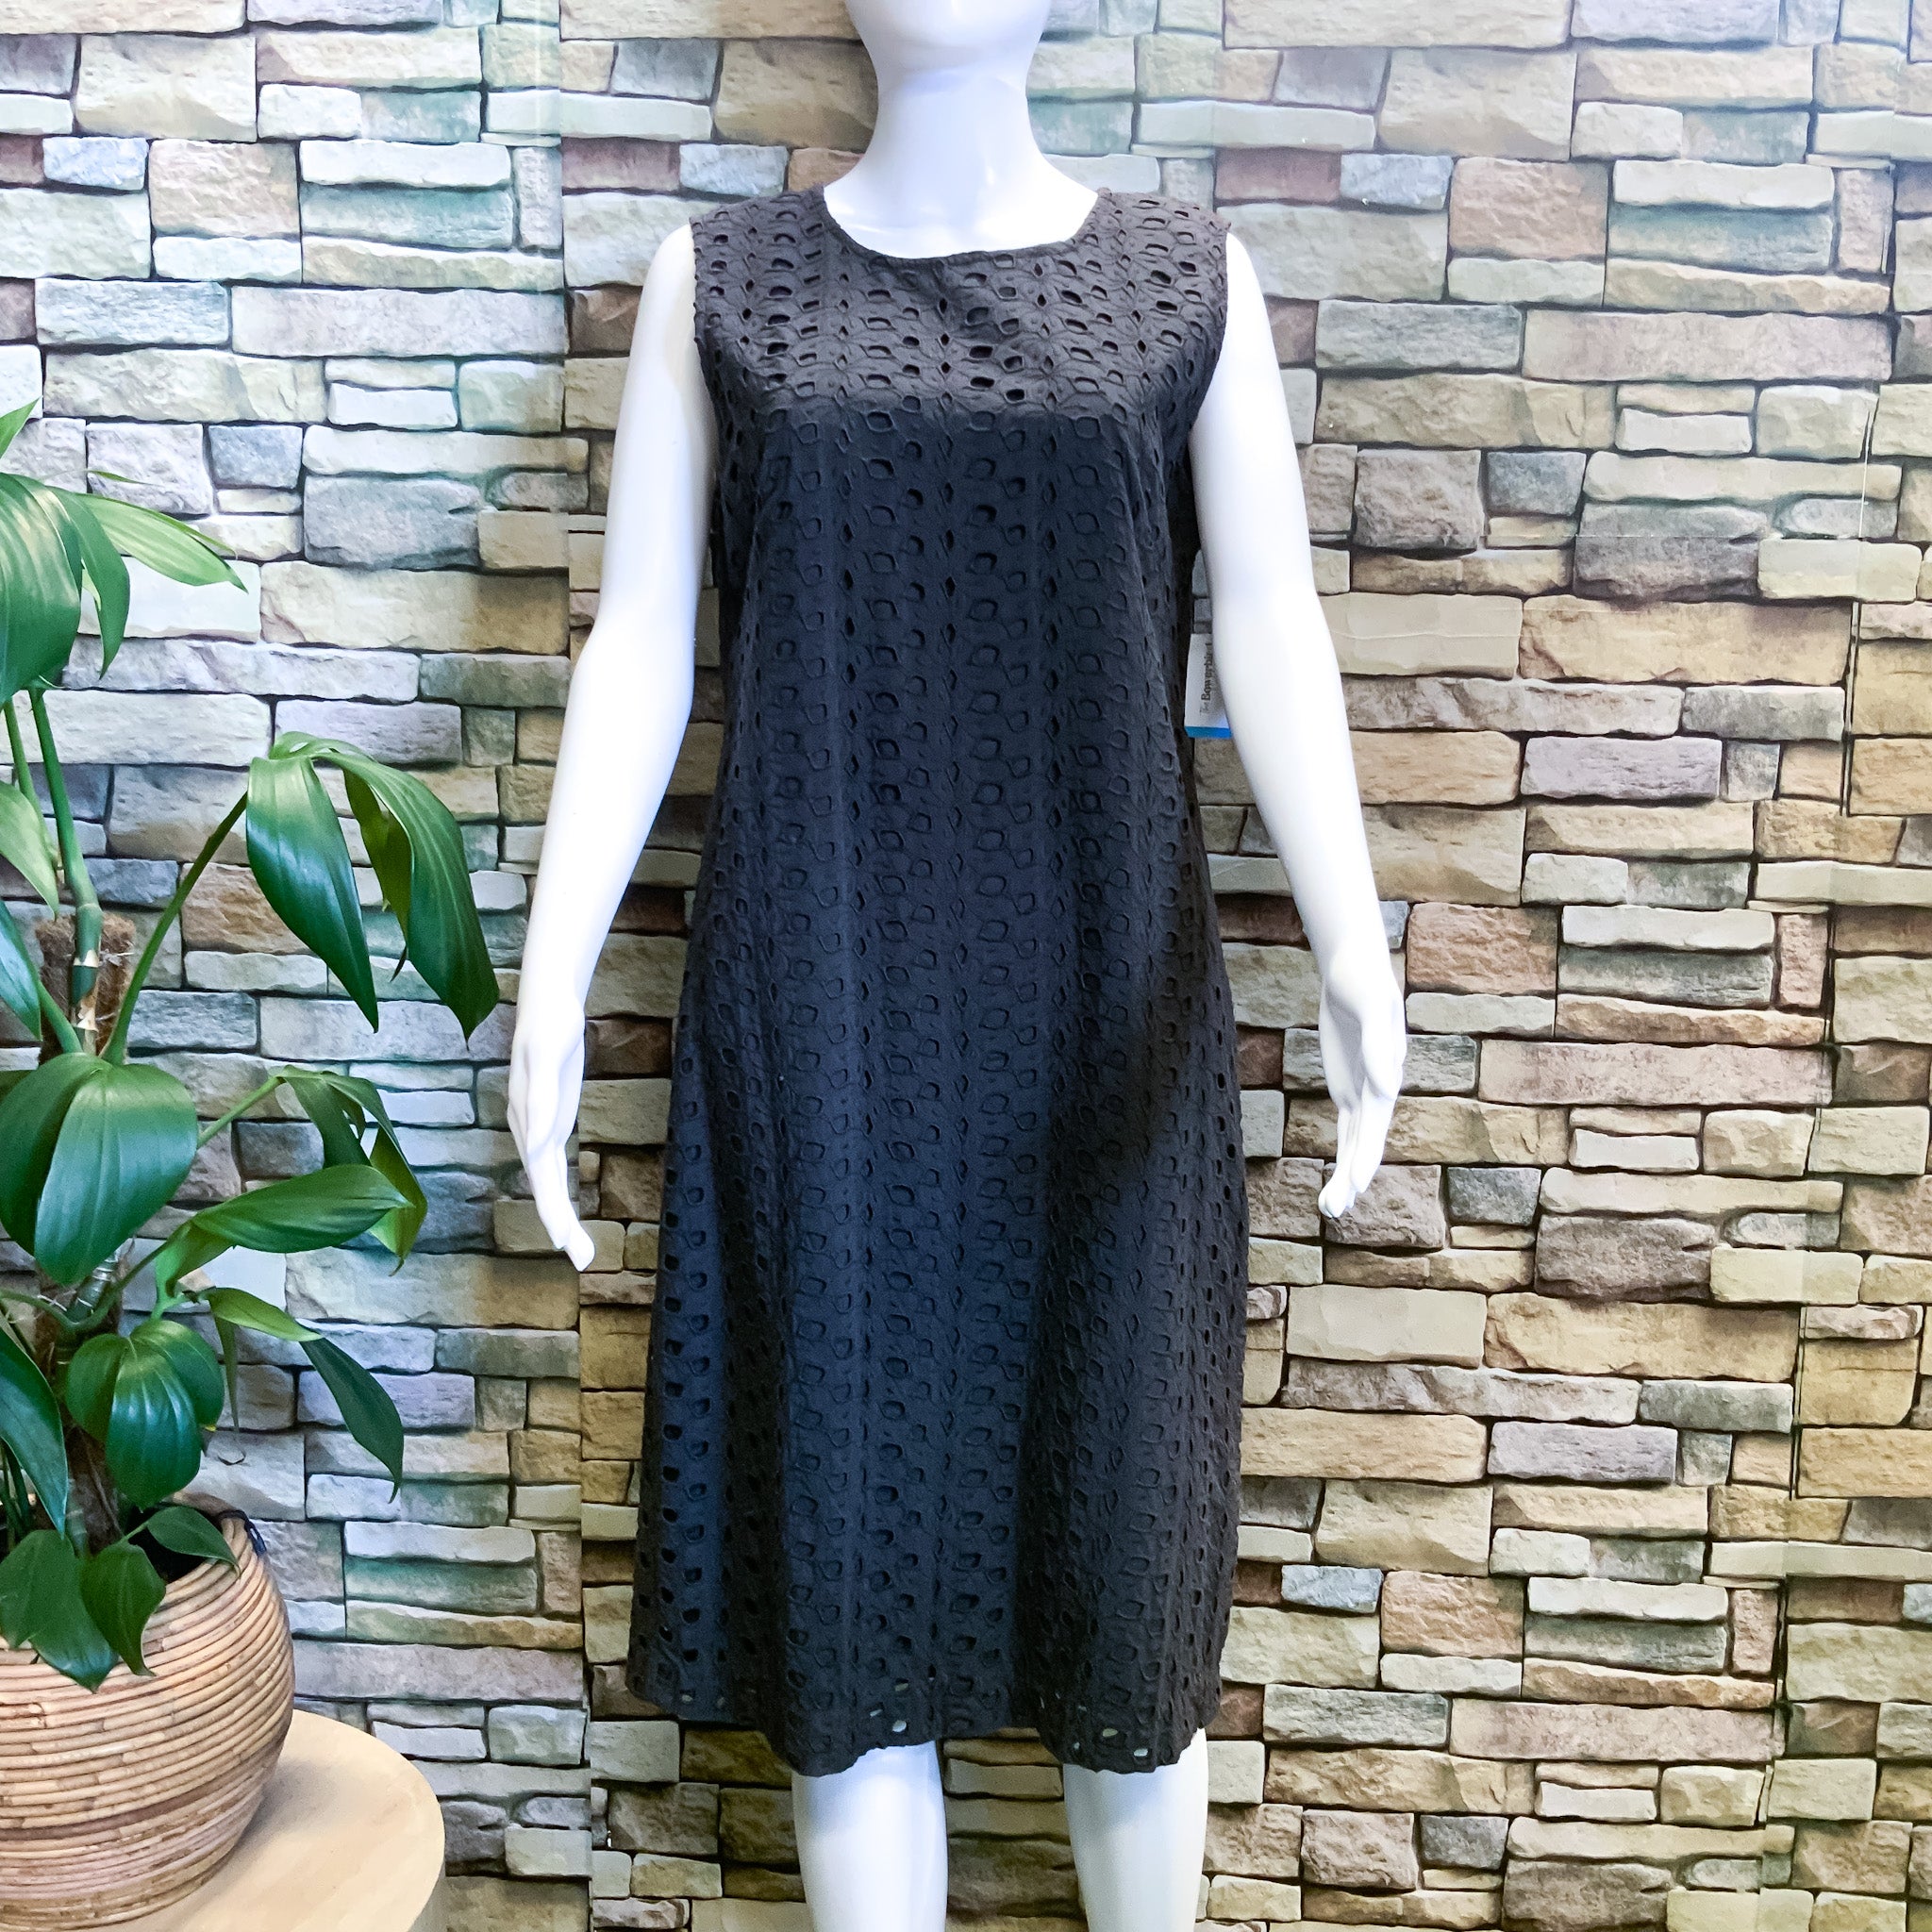 SPORTSCRAFT Charcoal Grey Sleeveless Lazer Cut Knee Length Dress - Size 12